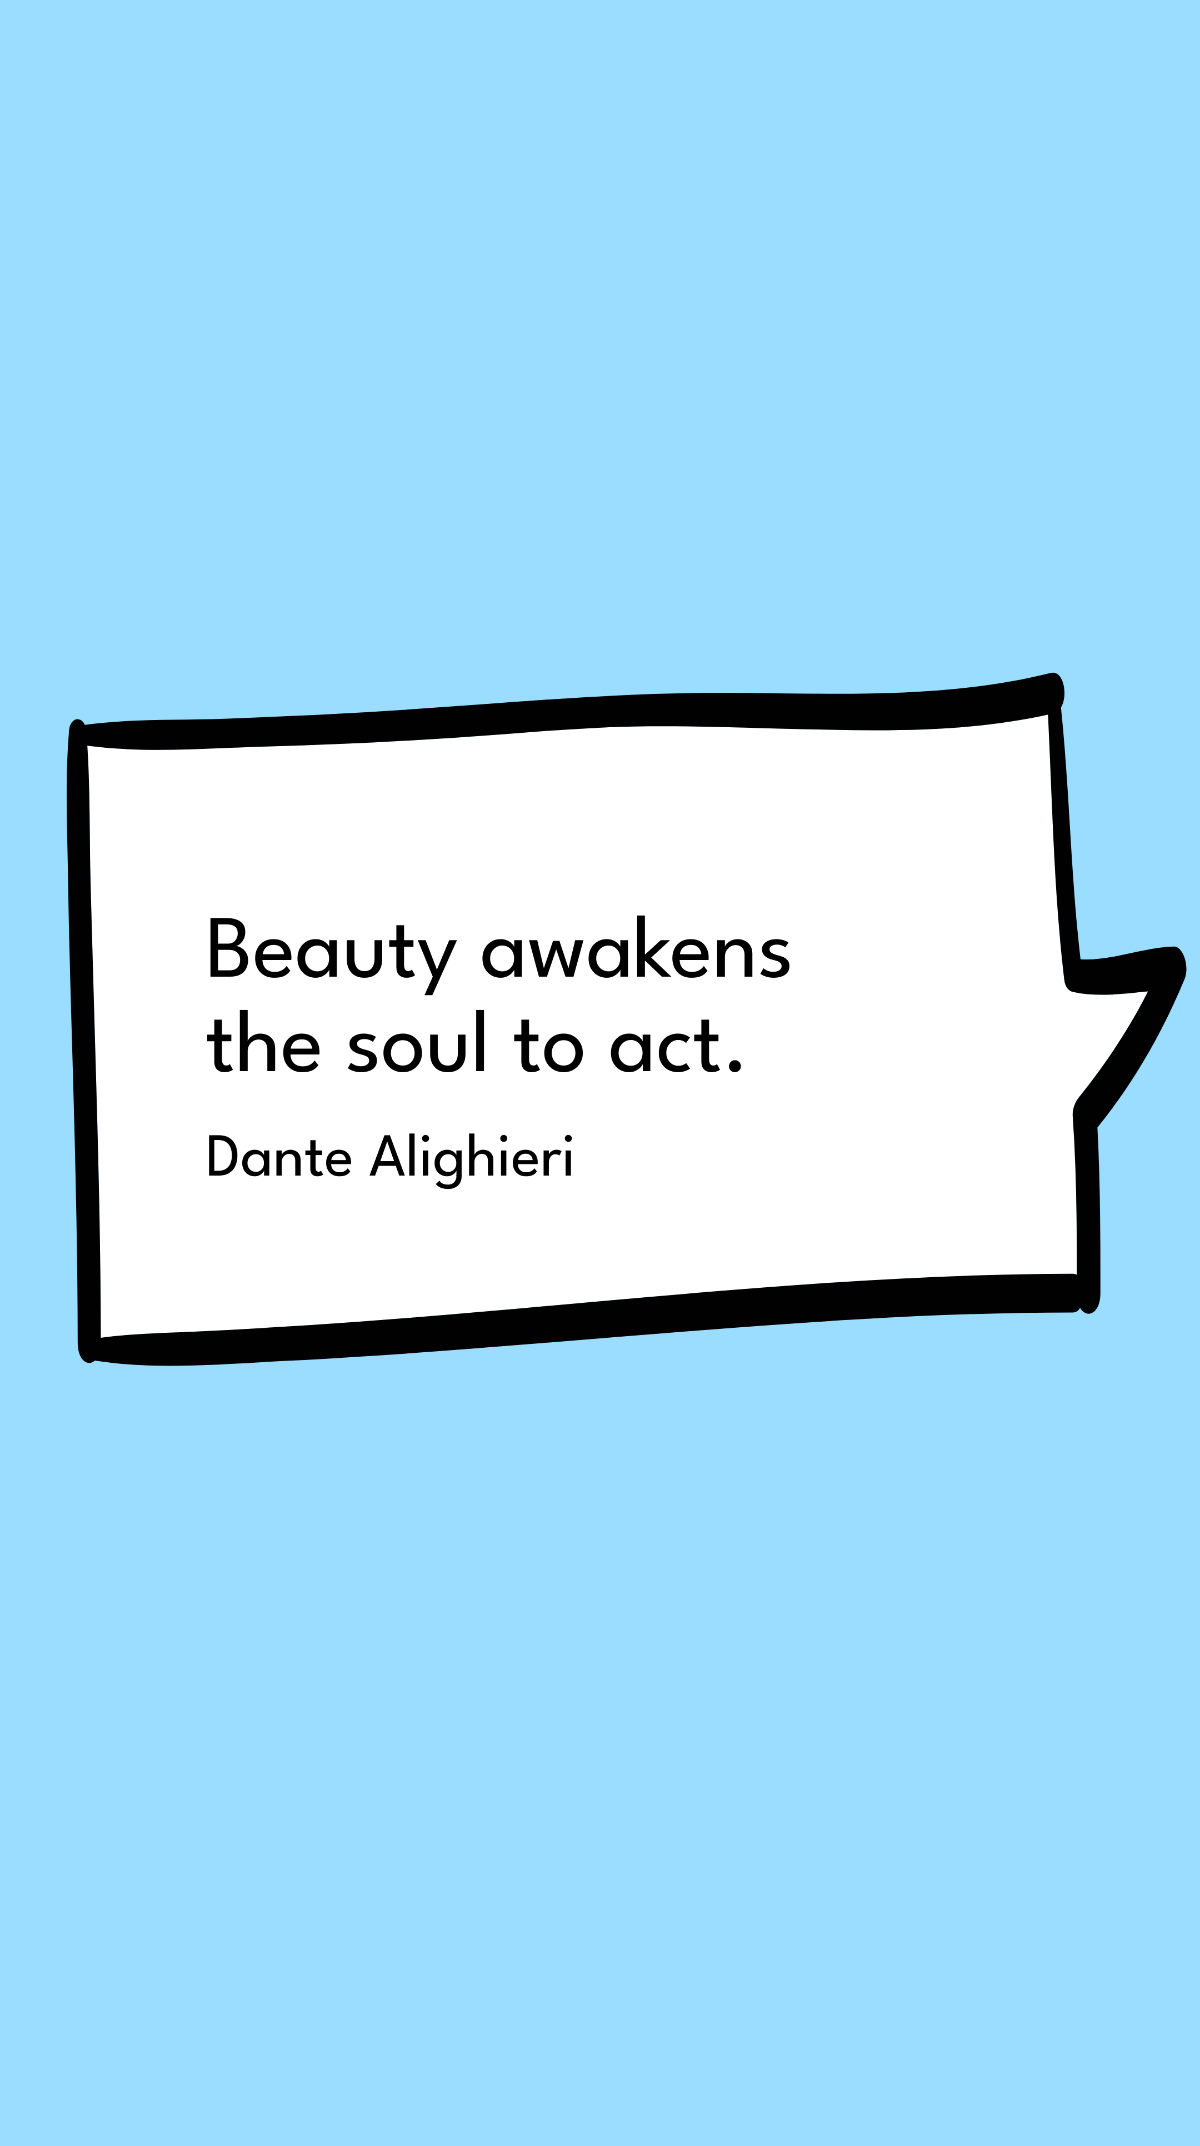 Dante Alighieri - Beauty awakens the soul to act.